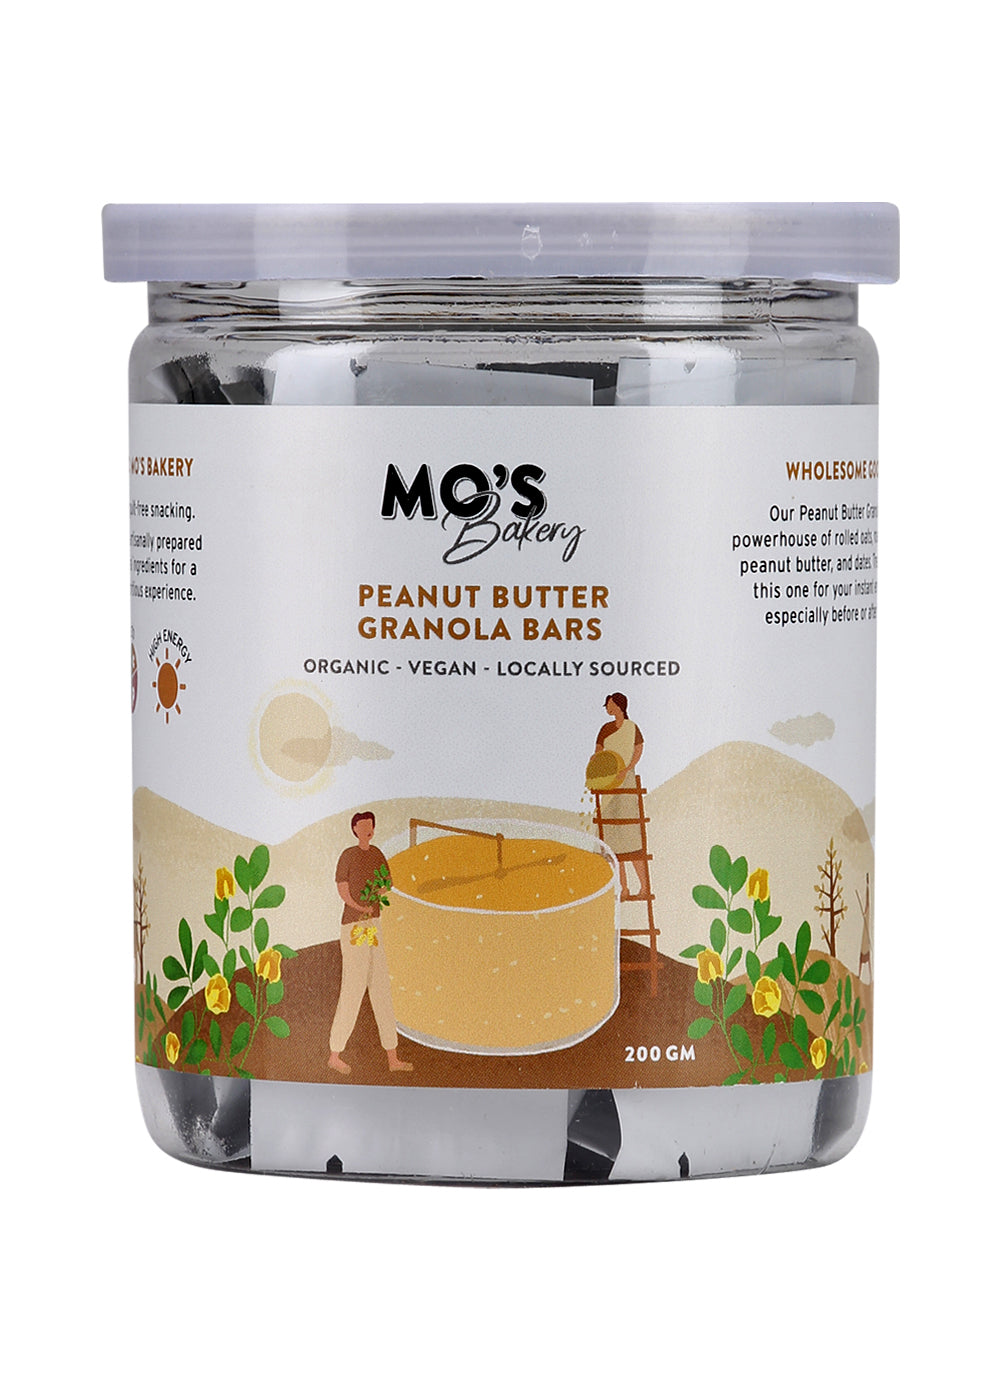 Mo's Bakery Peanut Butter Granola Bars vegan 100% natural keto diet bars & gluten free - 200g